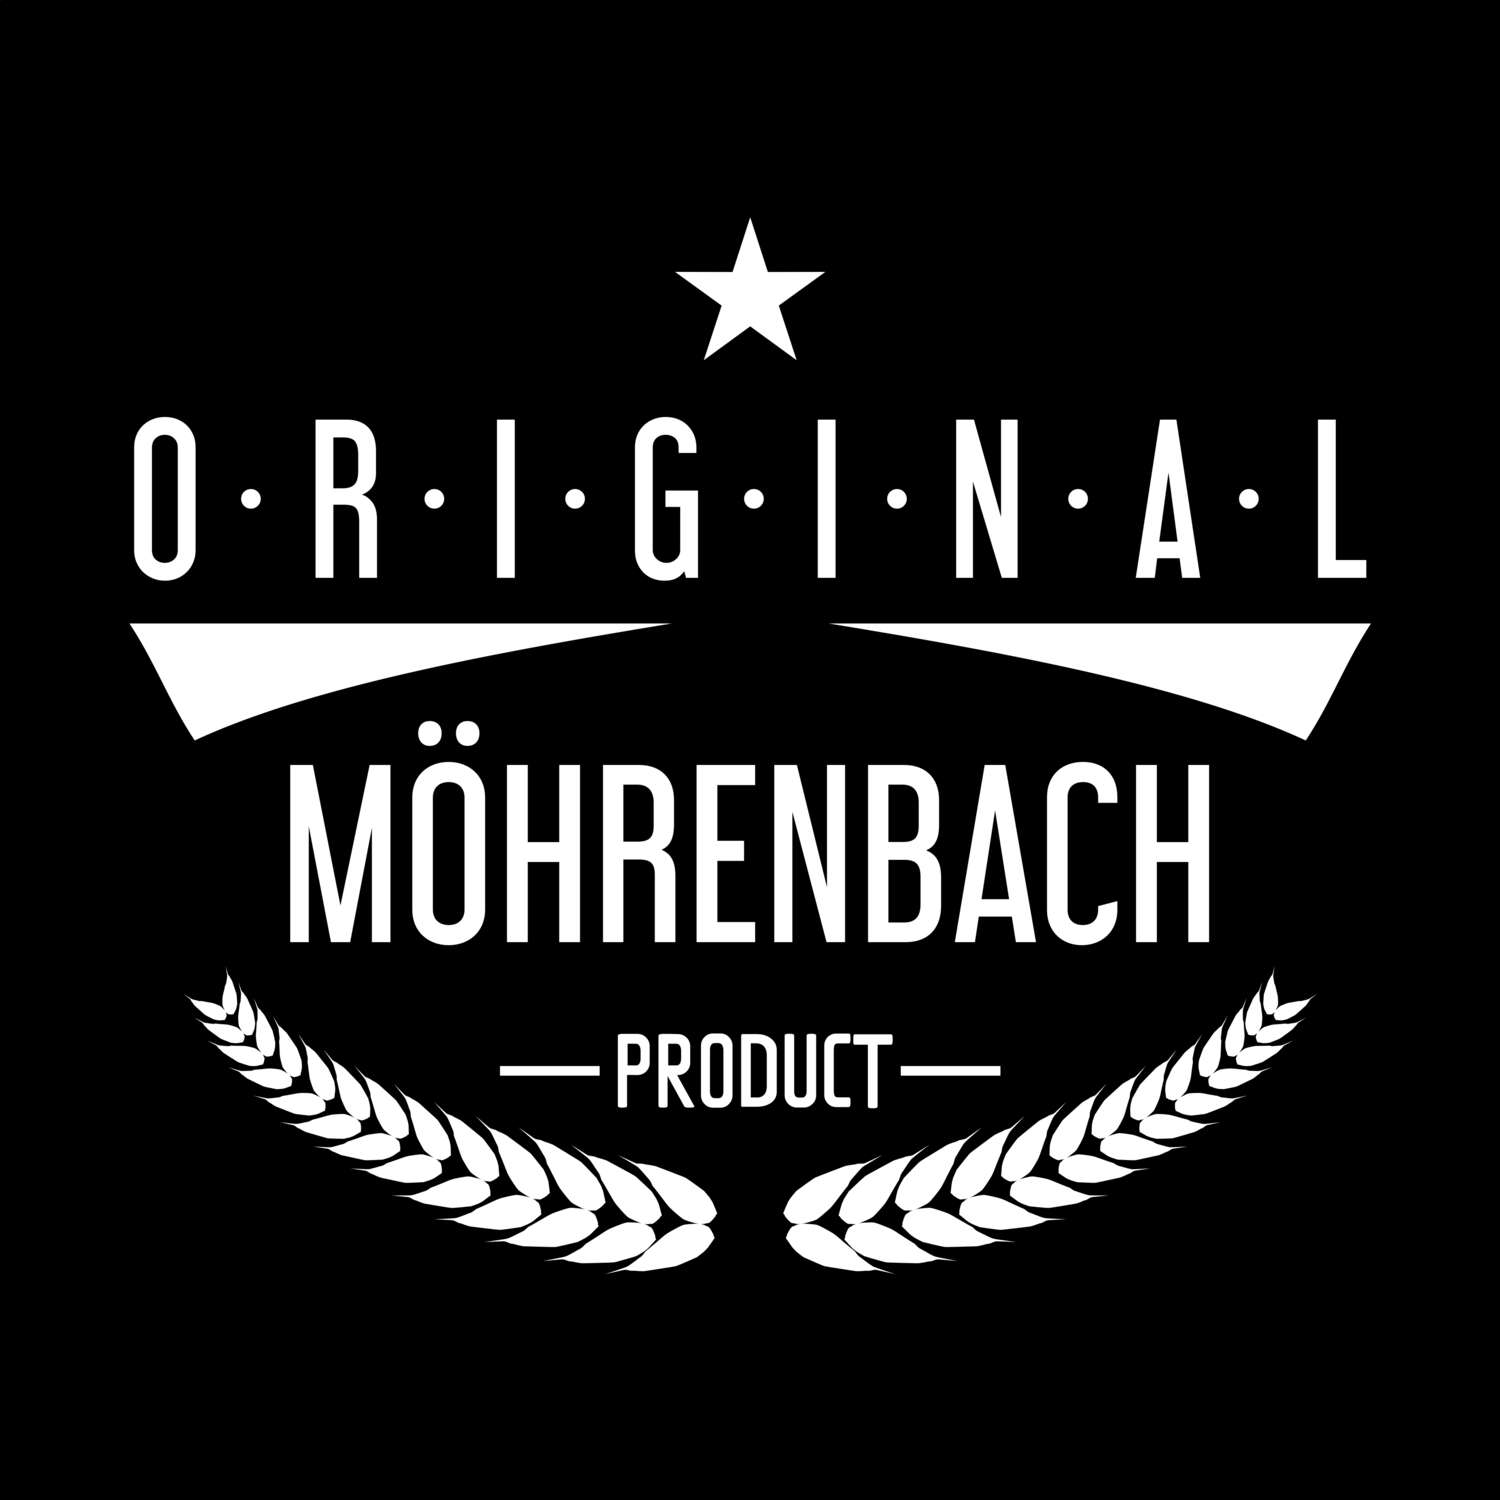 Möhrenbach T-Shirt »Original Product«